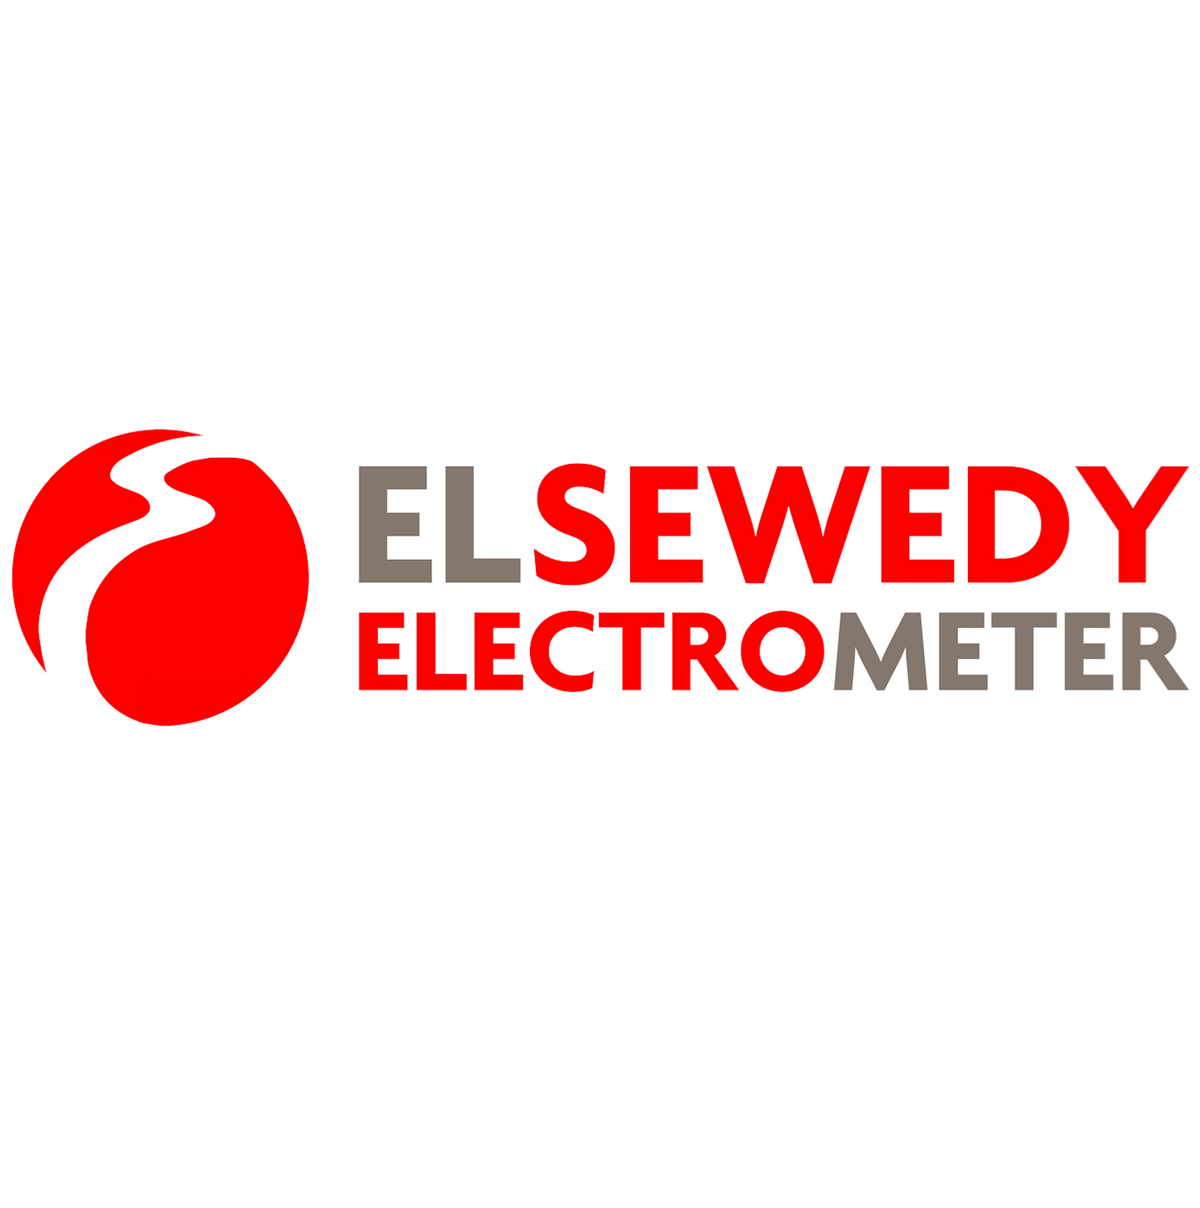 El-Sewedy Electrometer Group